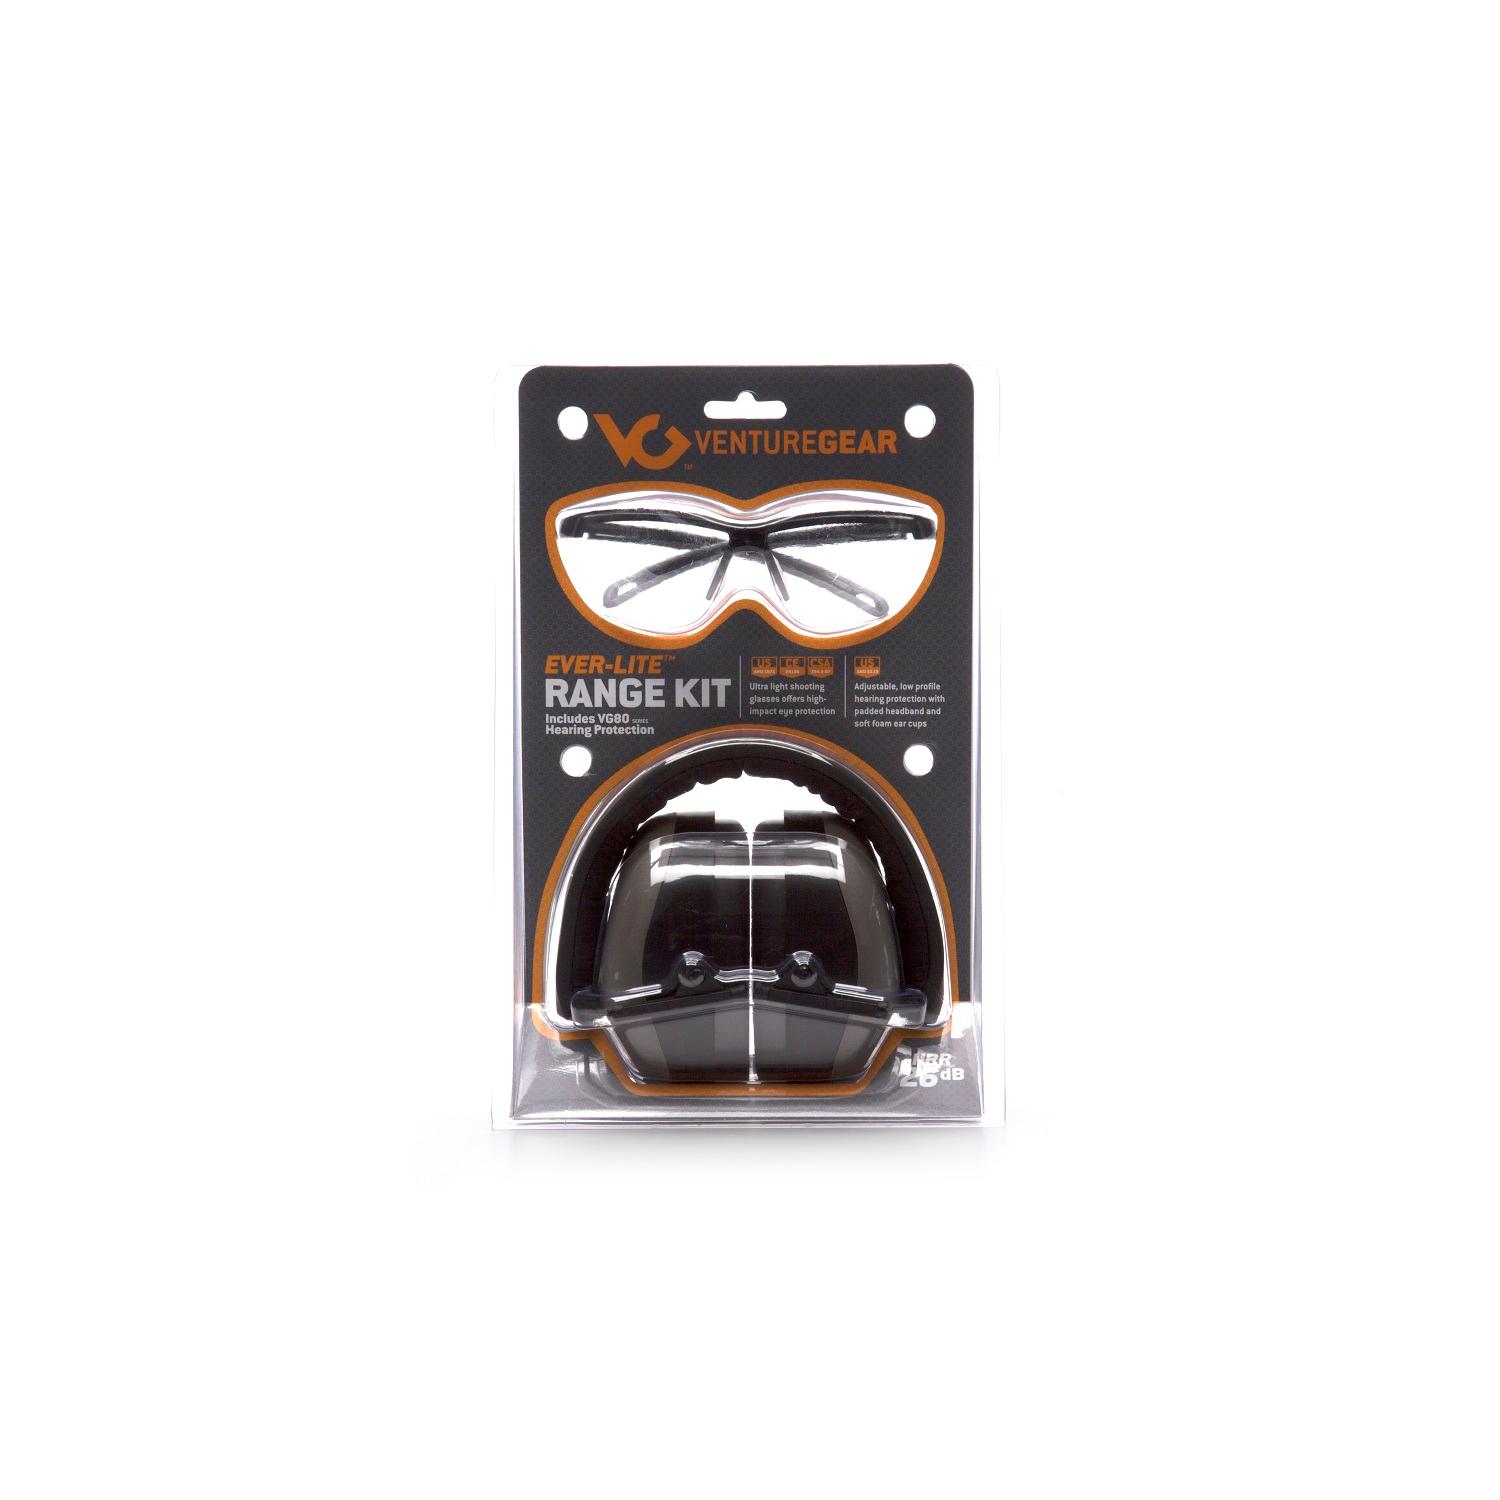 Venture Gear Ever-Lite Range Kit Clear Lens Gray Ear Muff